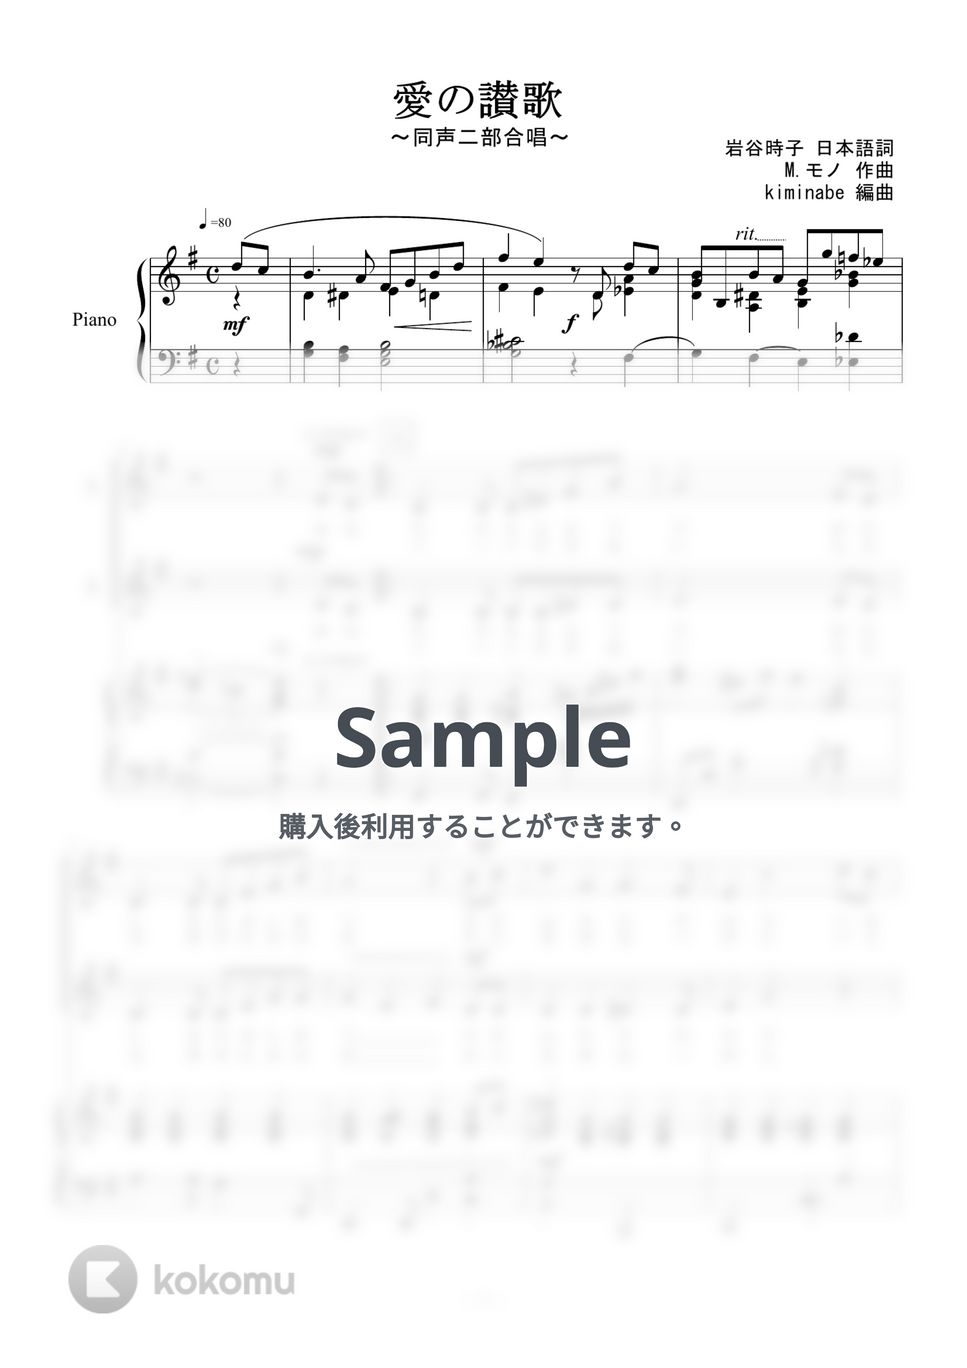 越路吹雪 - 愛の讃歌 (同声二部合唱) by kiminabe